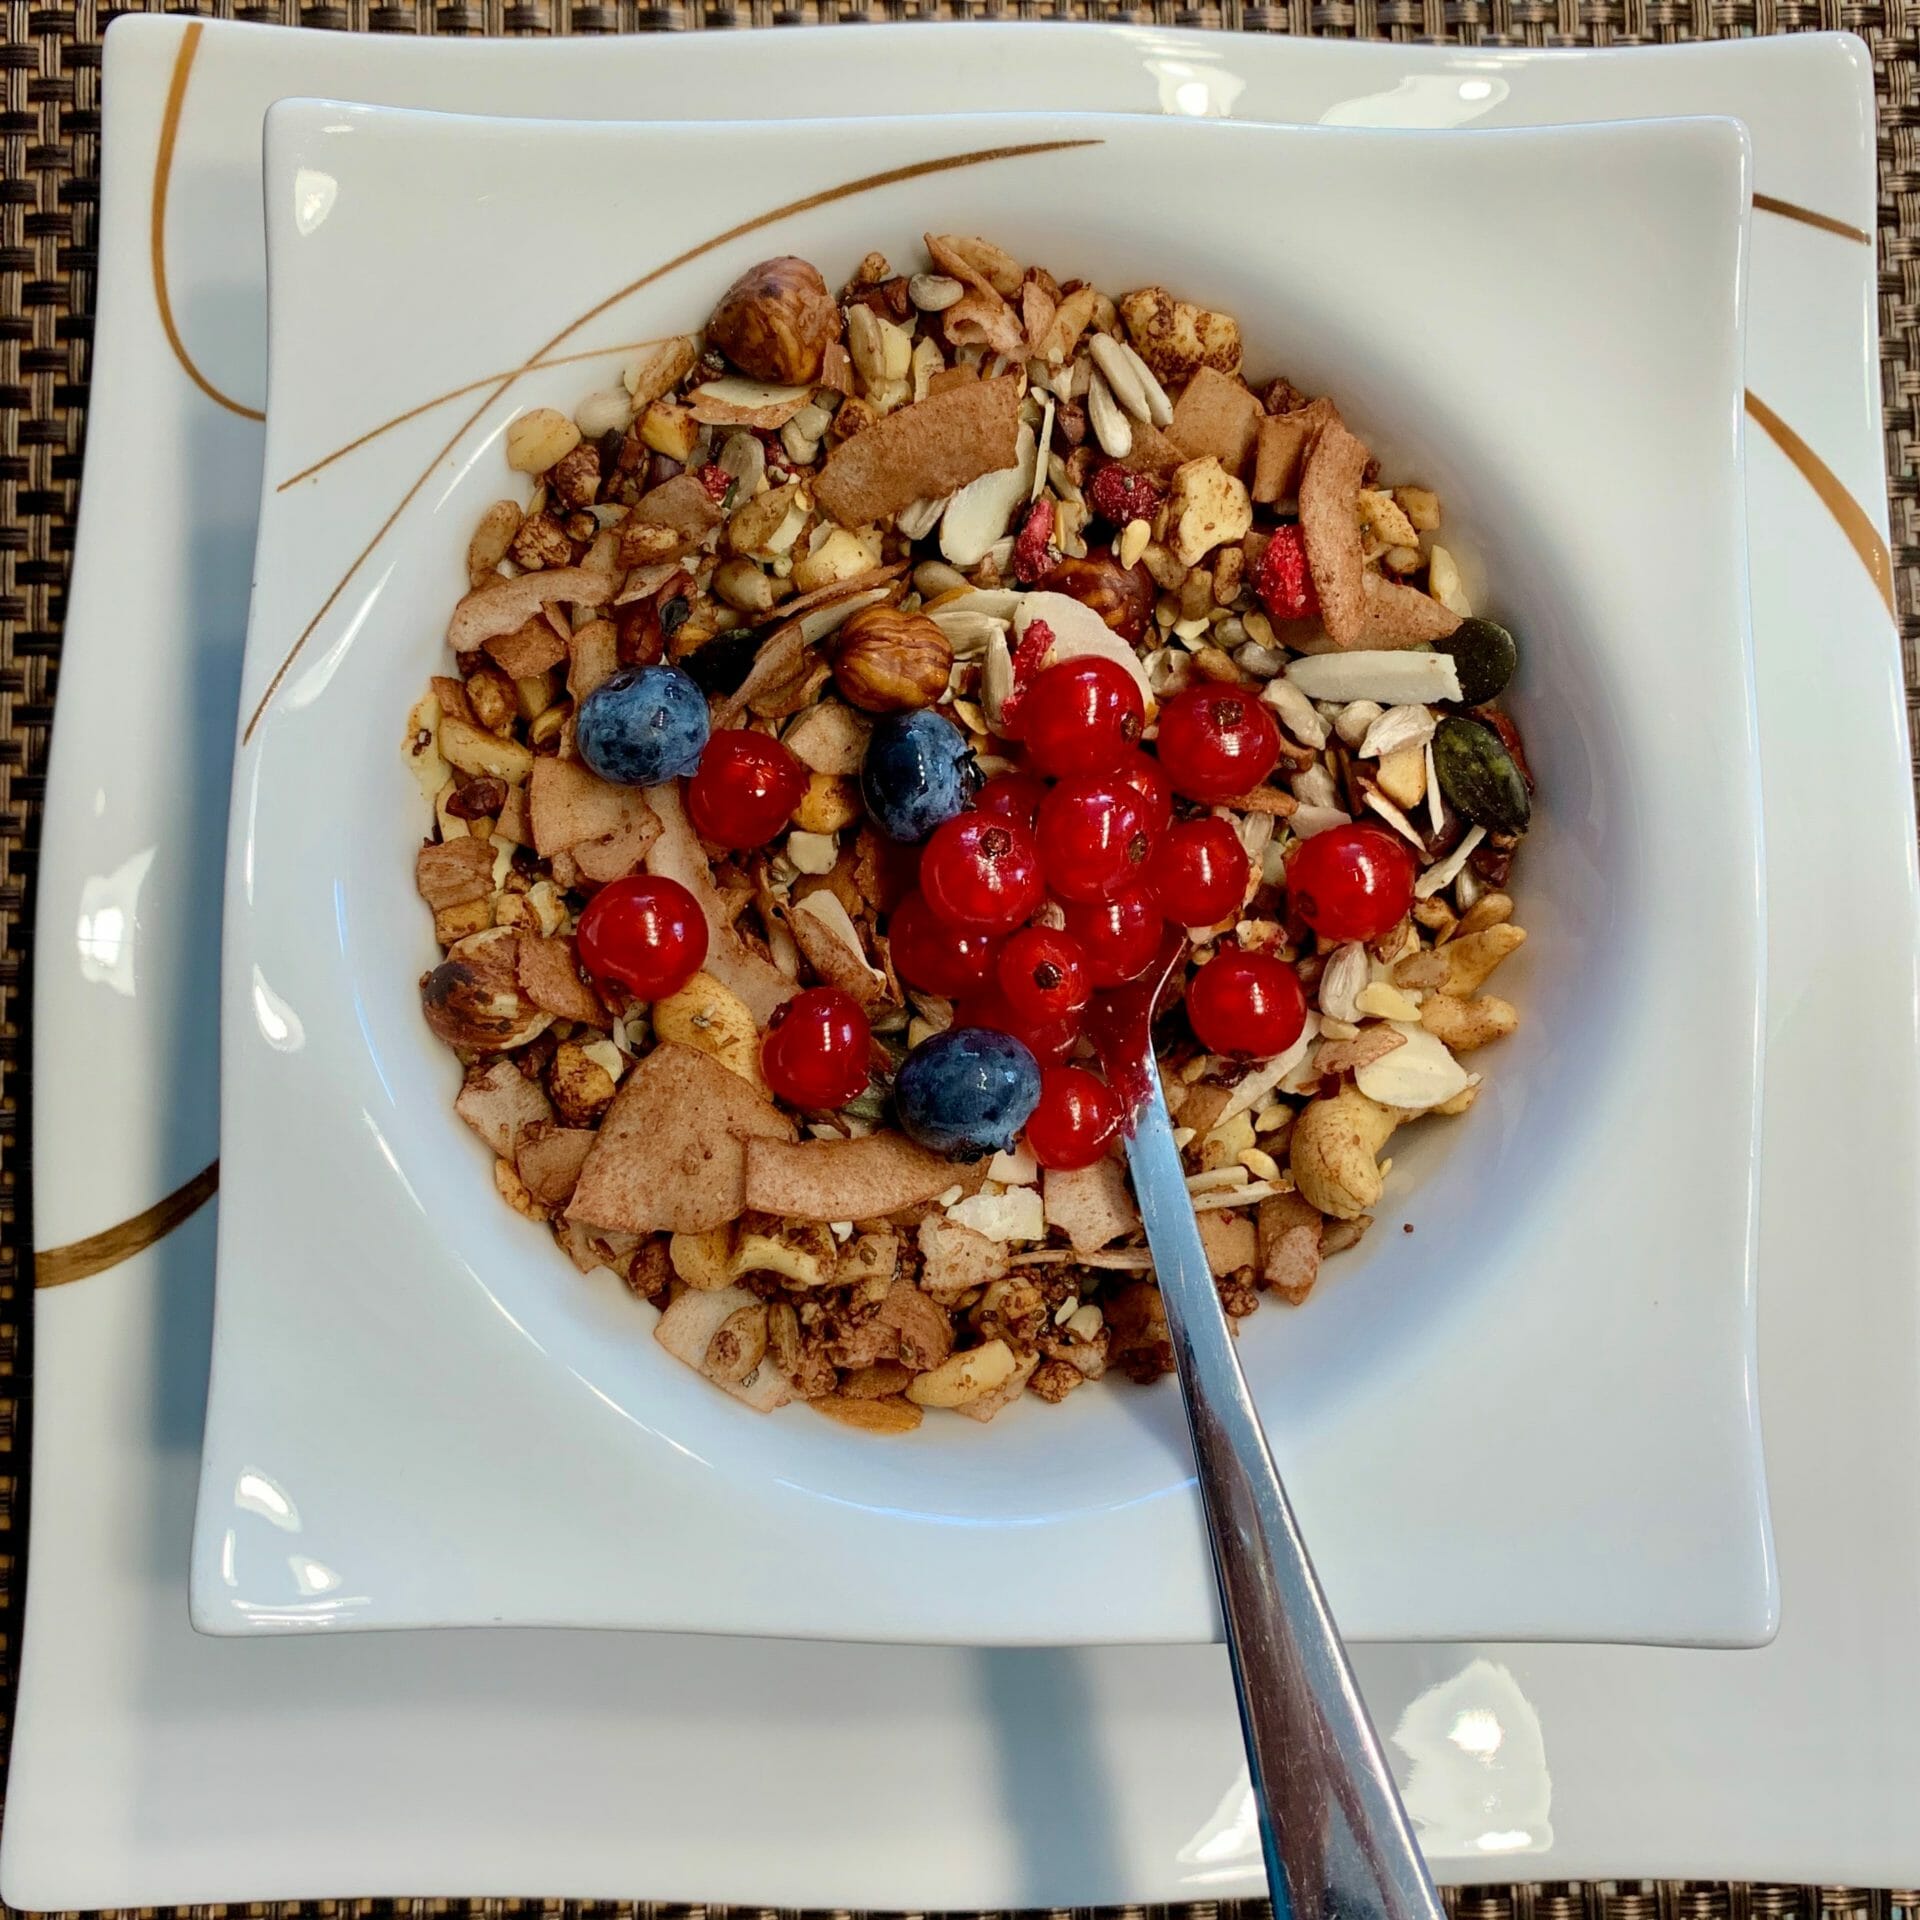 Paleo granola (nut based) with fresh berries